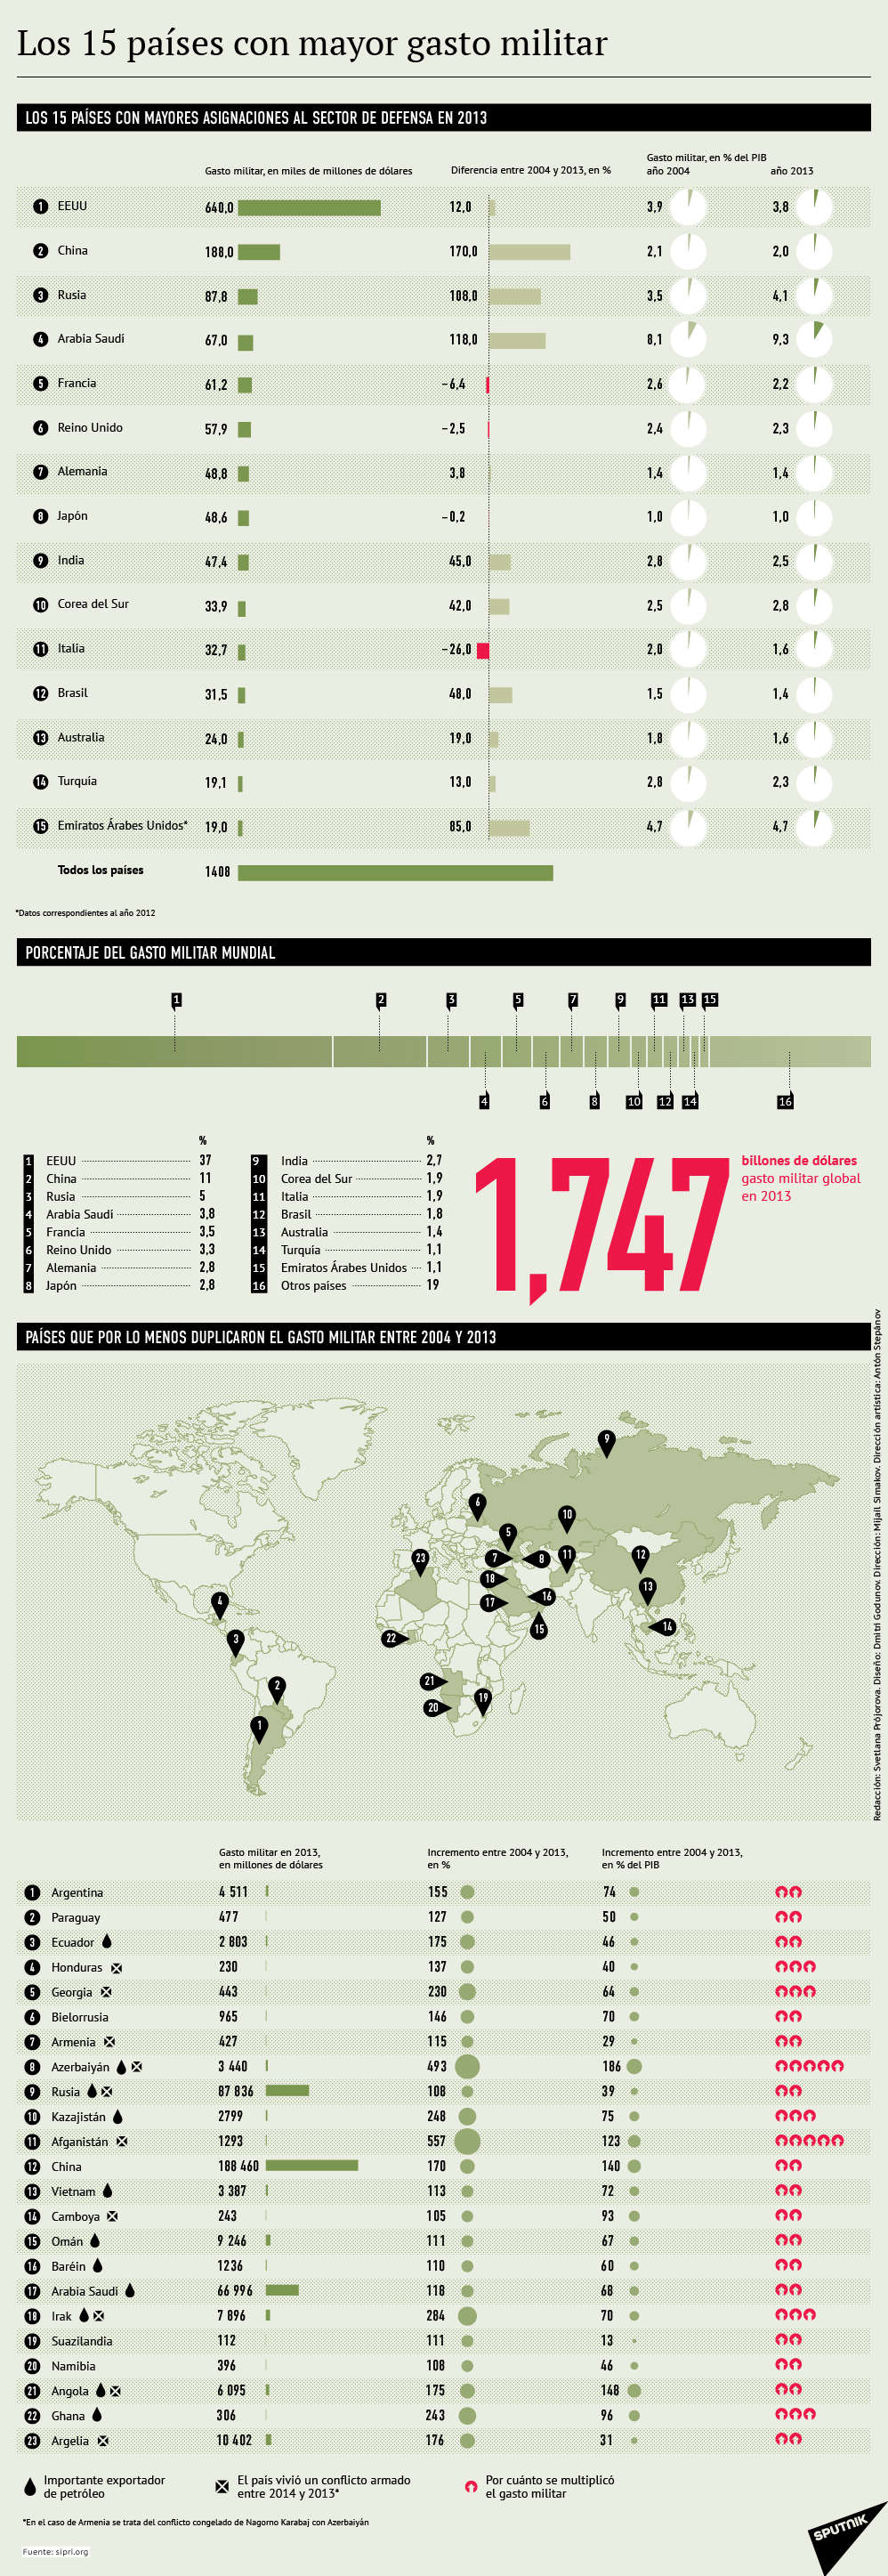 Los 15 países con mayor gasto militar - Sputnik Mundo